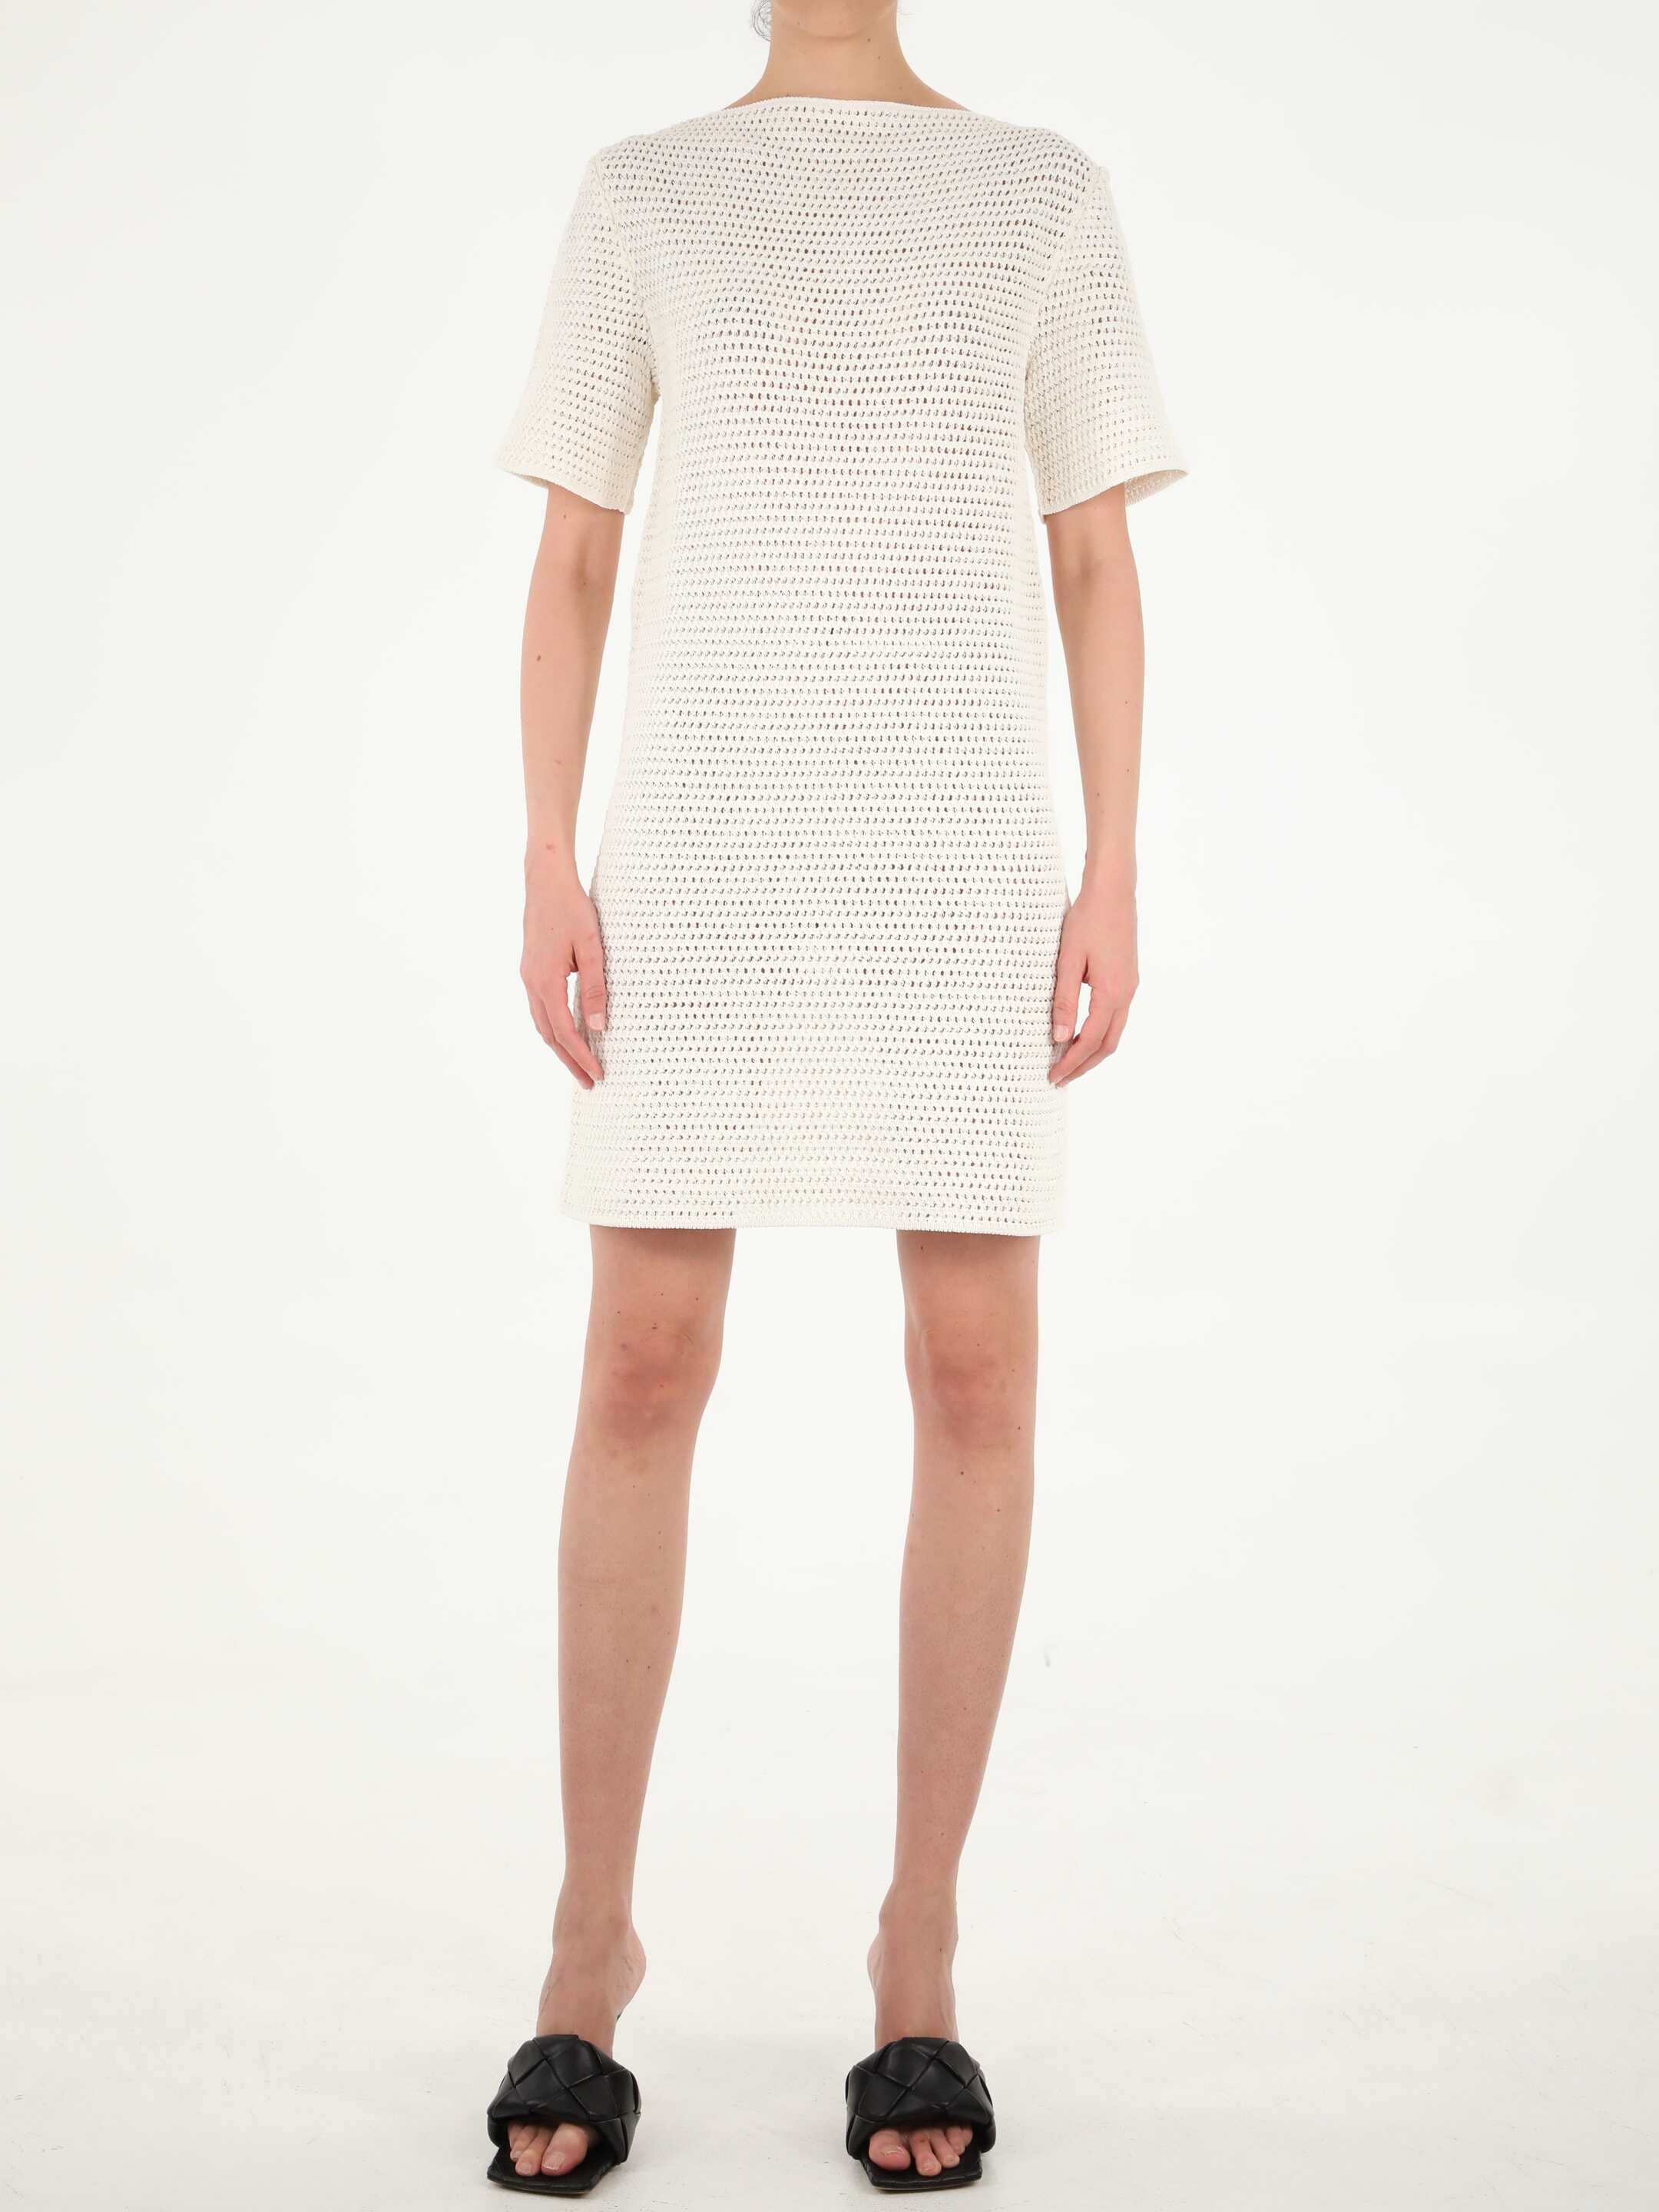 Bottega Veneta Crochet Dress White image1